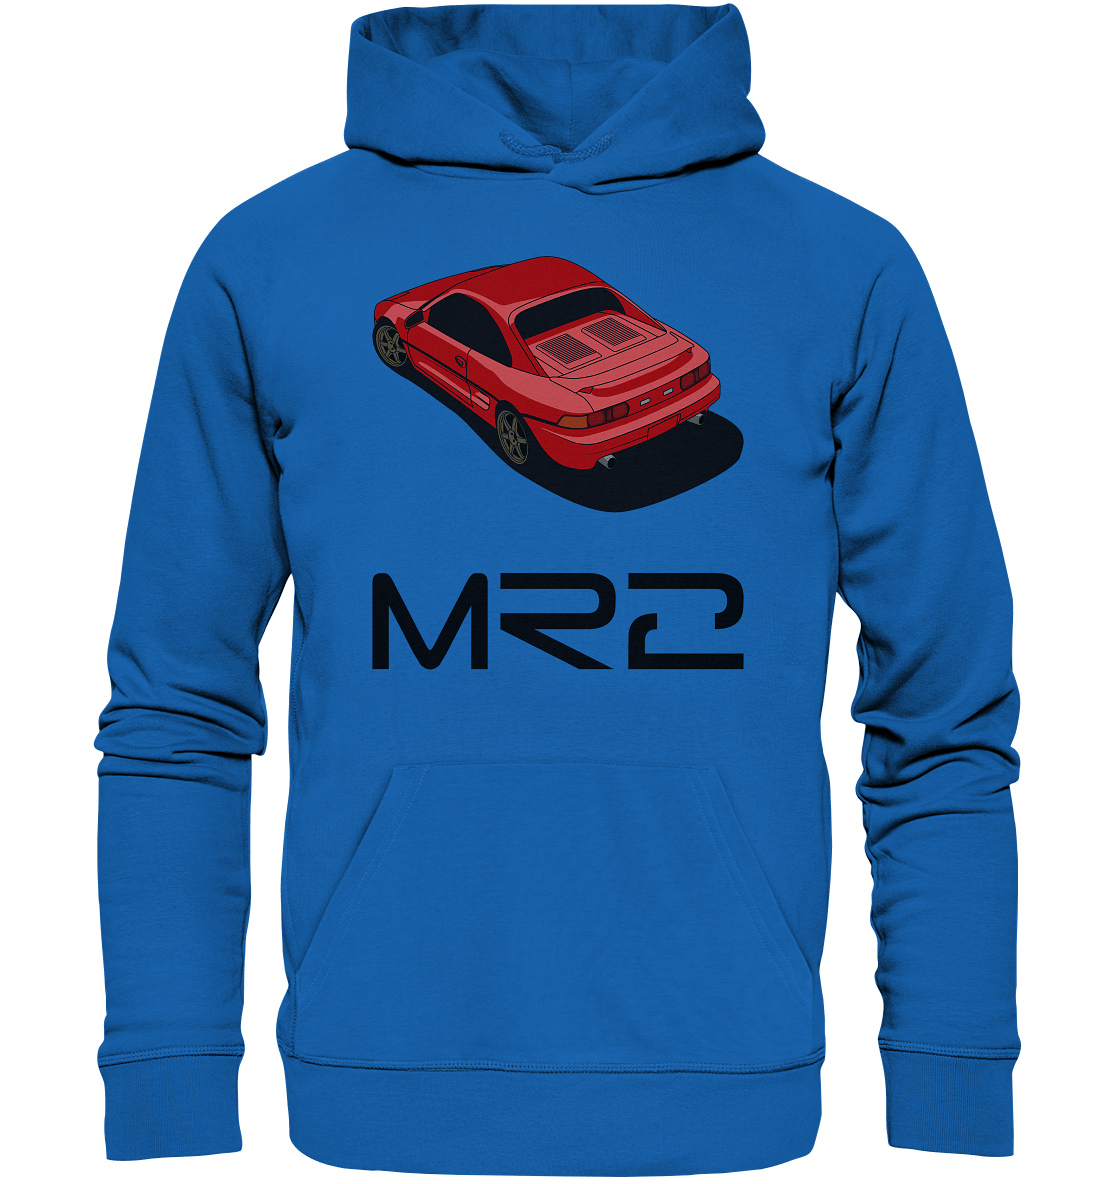 red MR2 - Premium Unisex Hoodie - MotoMerch.de